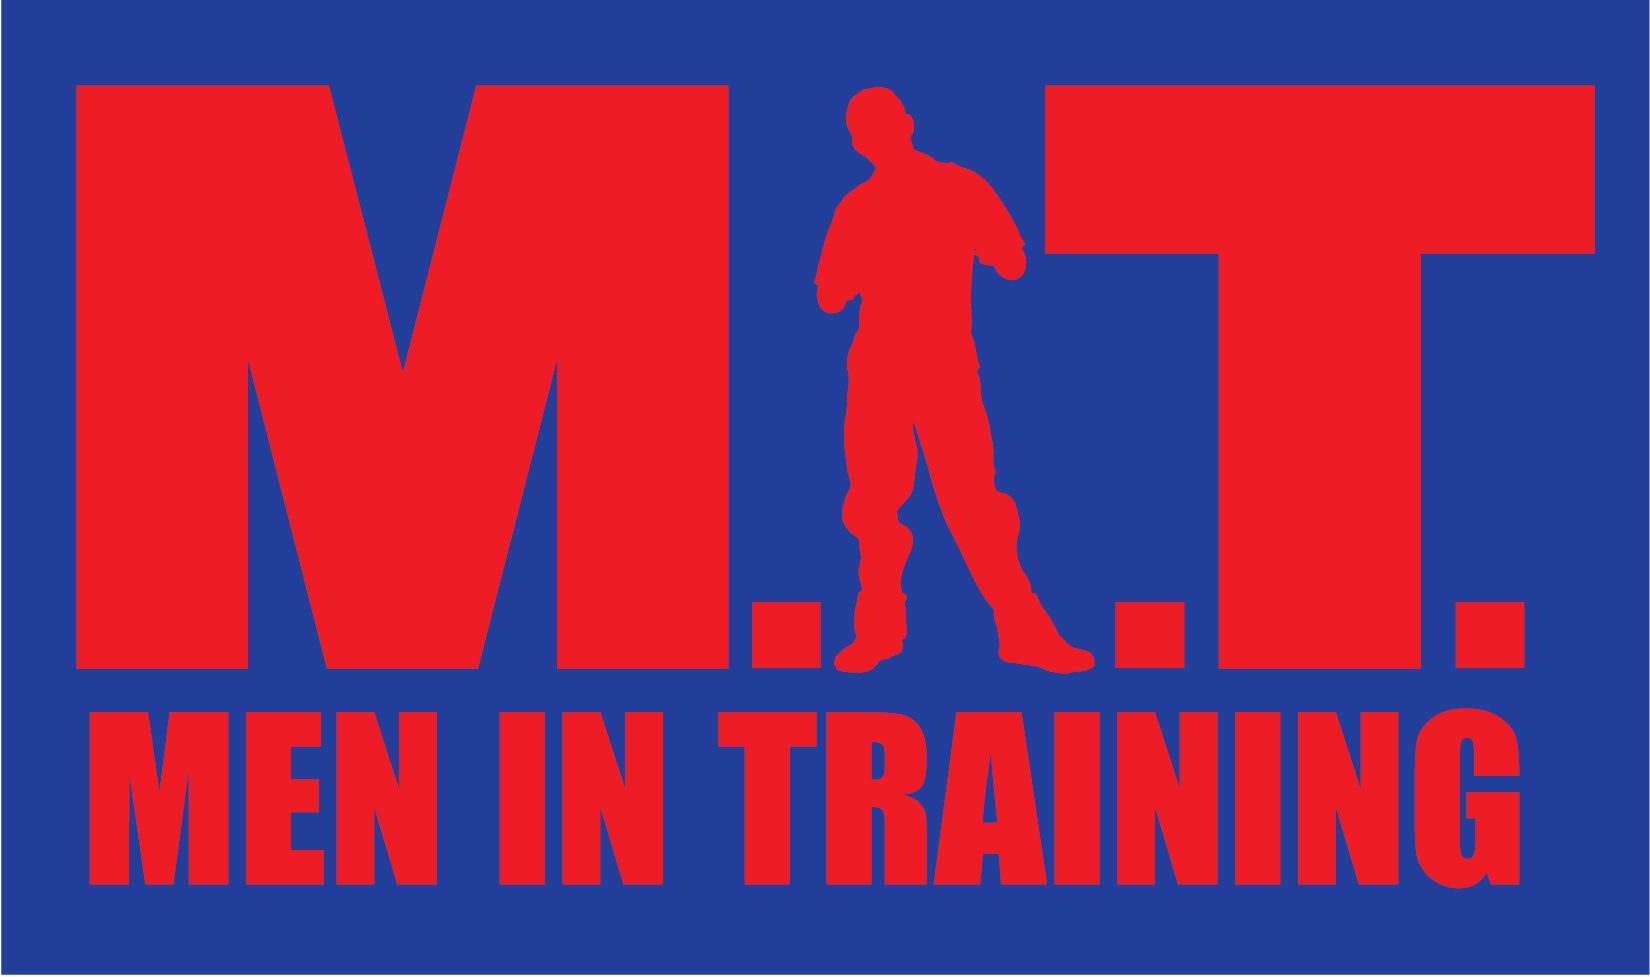 Men In Training youth mentoring progam logo